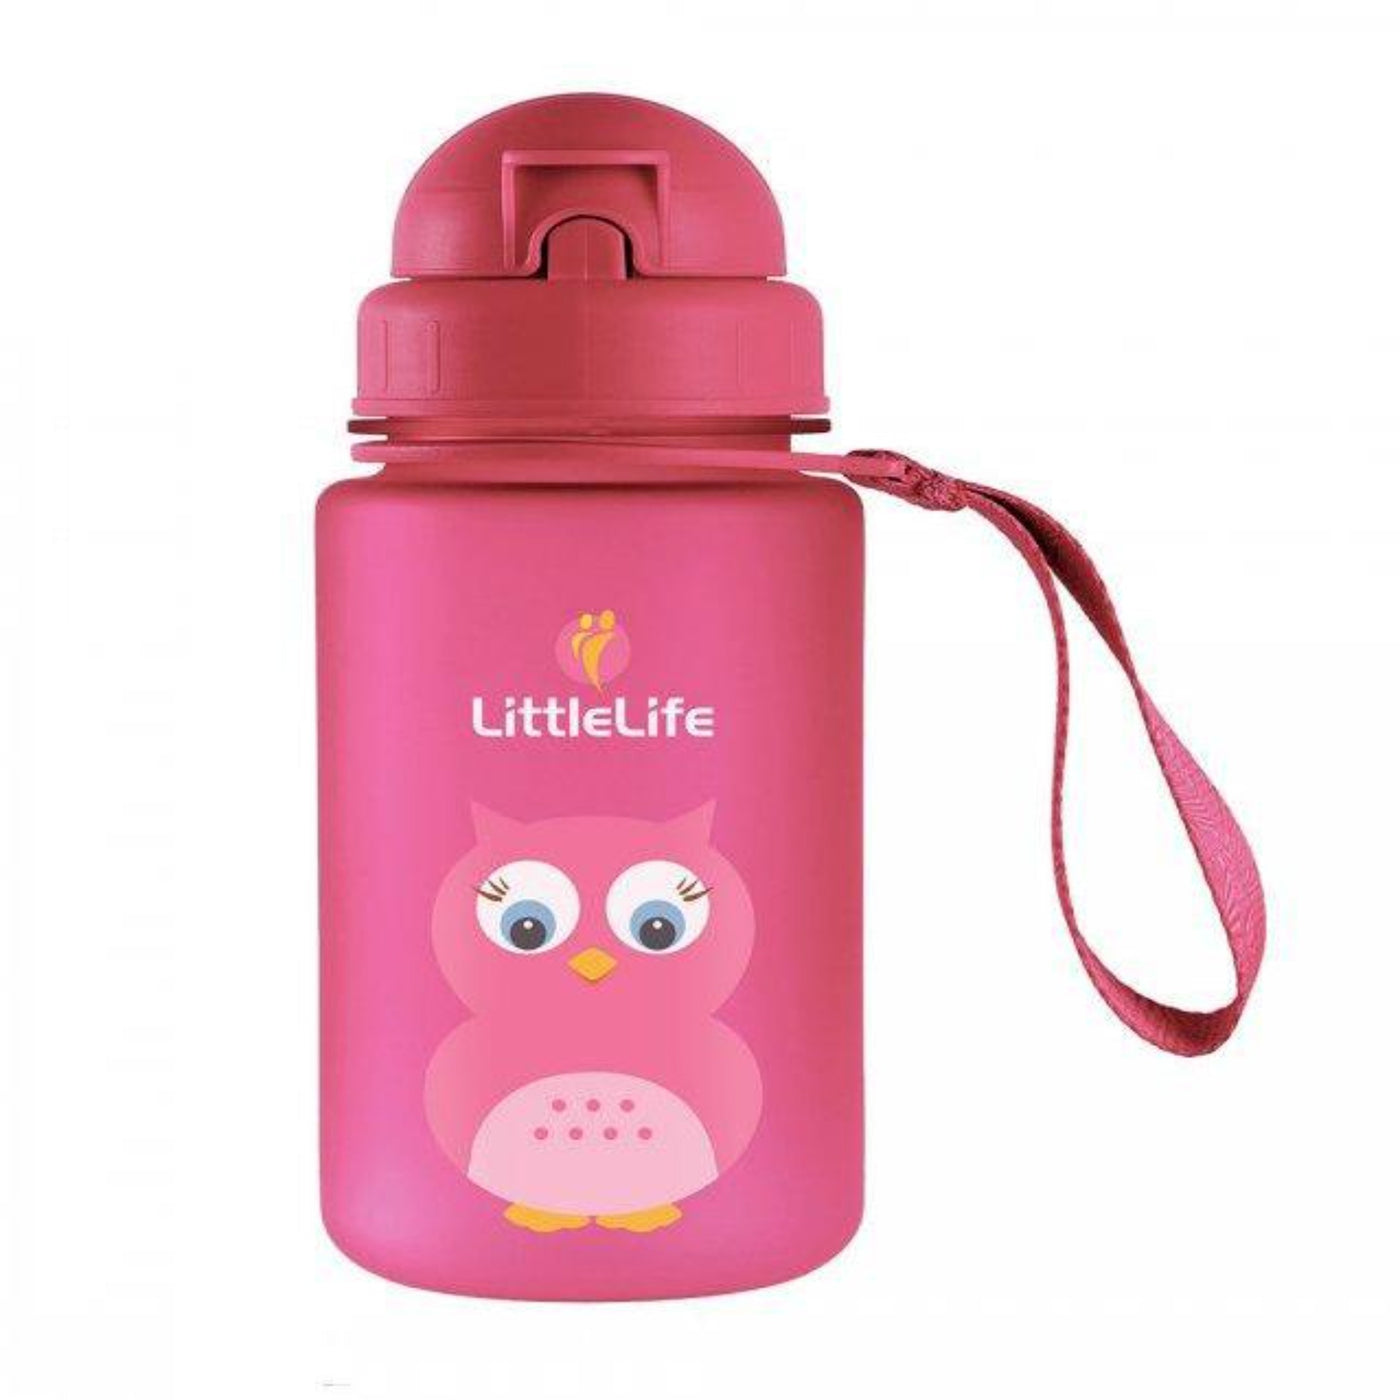 Littlelife Animal Water Bottle | Kids Outdoors Bottles | NZ #Owl